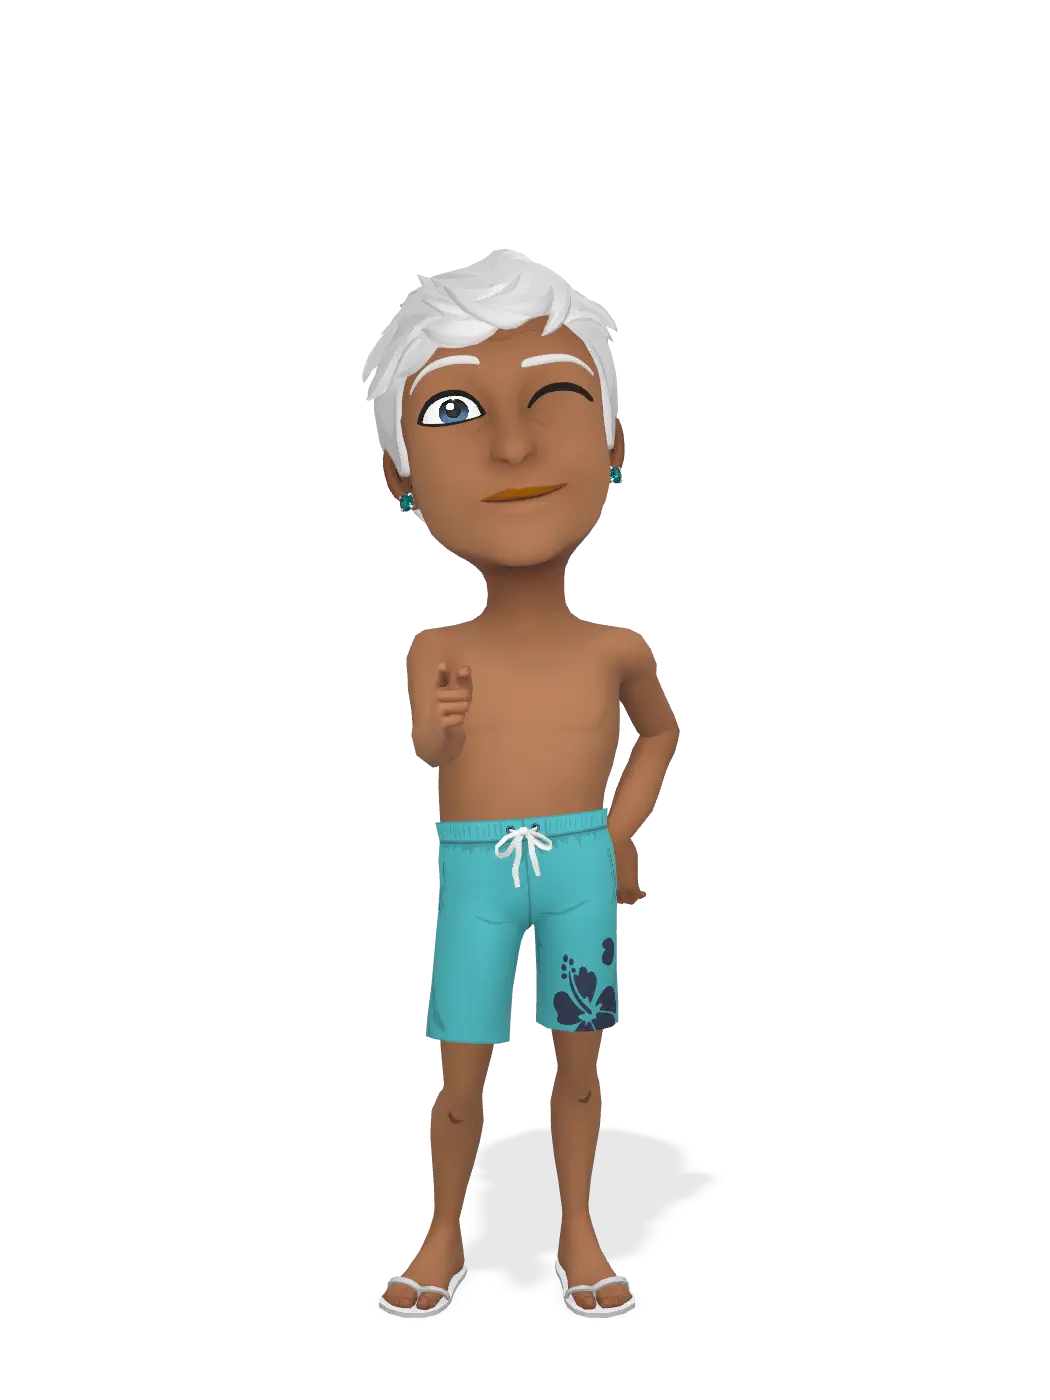 3D Bitmoji for tylerjpavlikxxx avatar